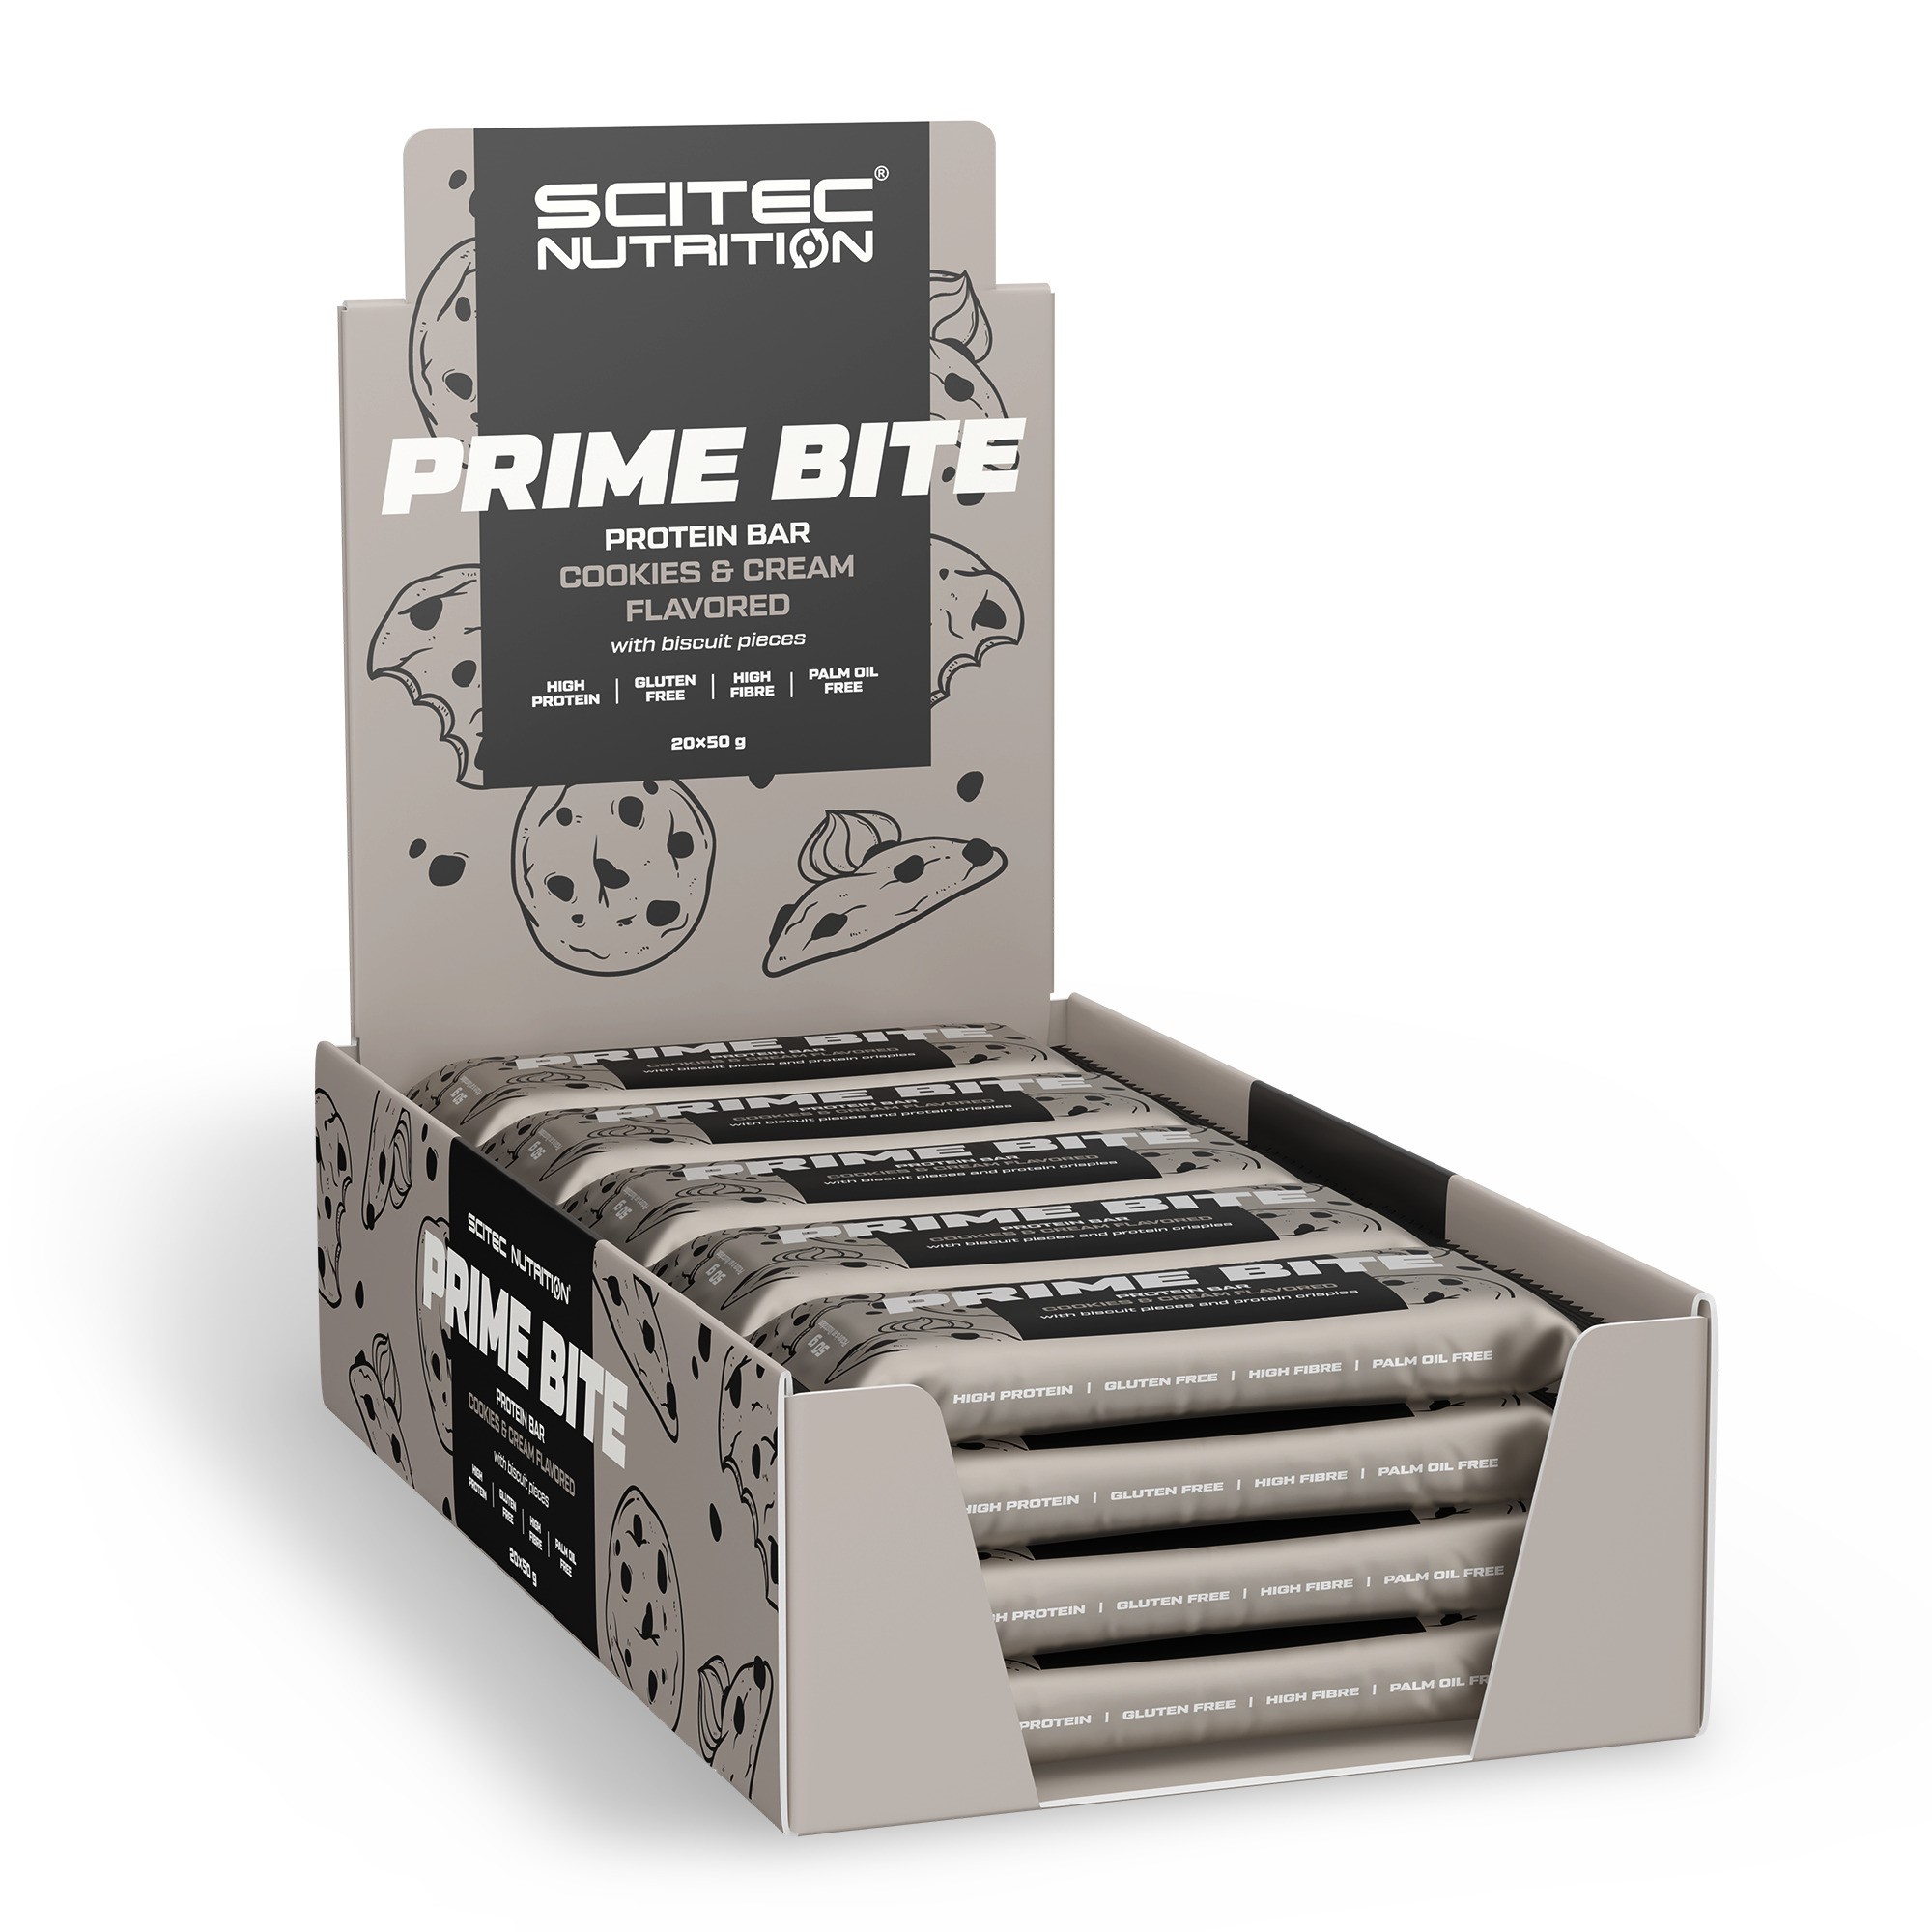 Caja de Barras Prime Bite Cookies&Cream (20 unid.)